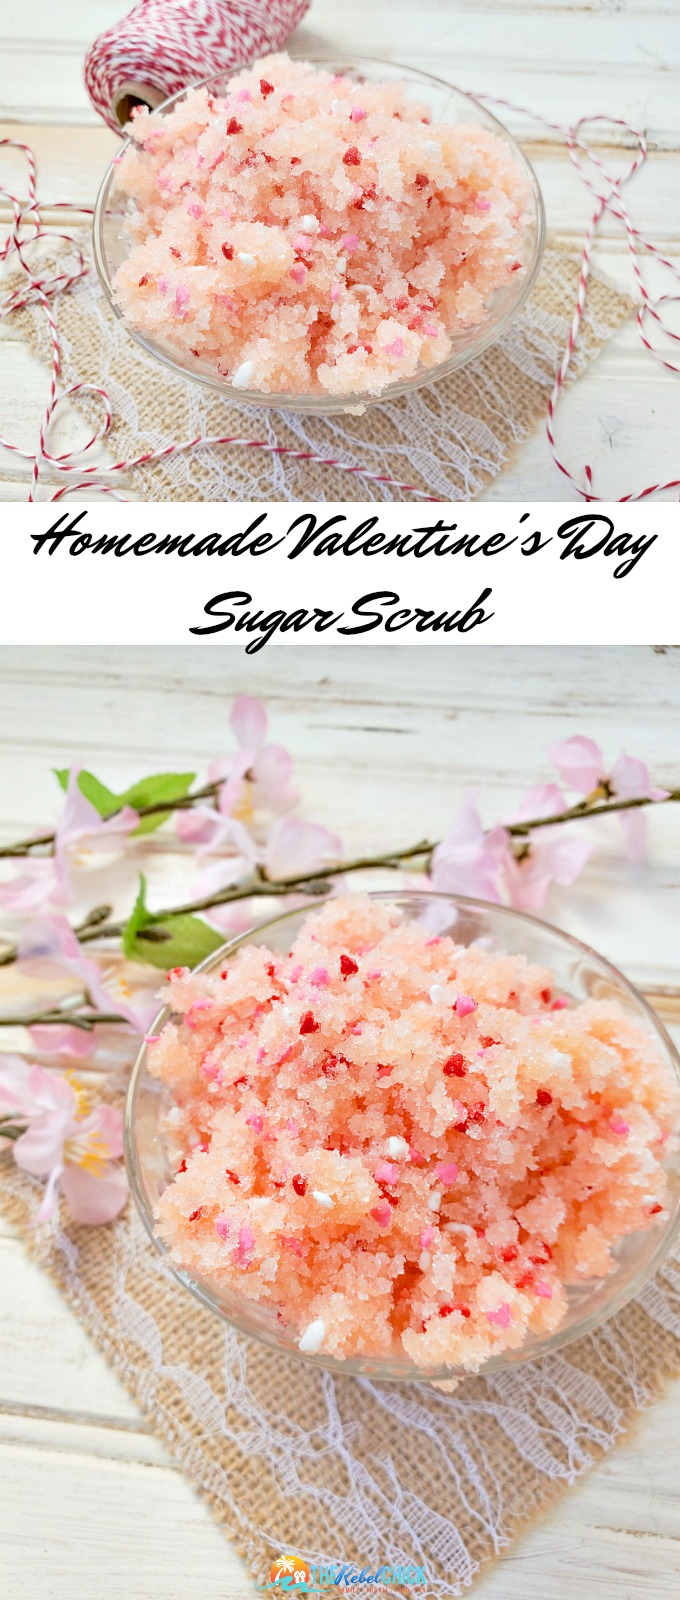 Homemade Valentine's Day Sugar Scrub